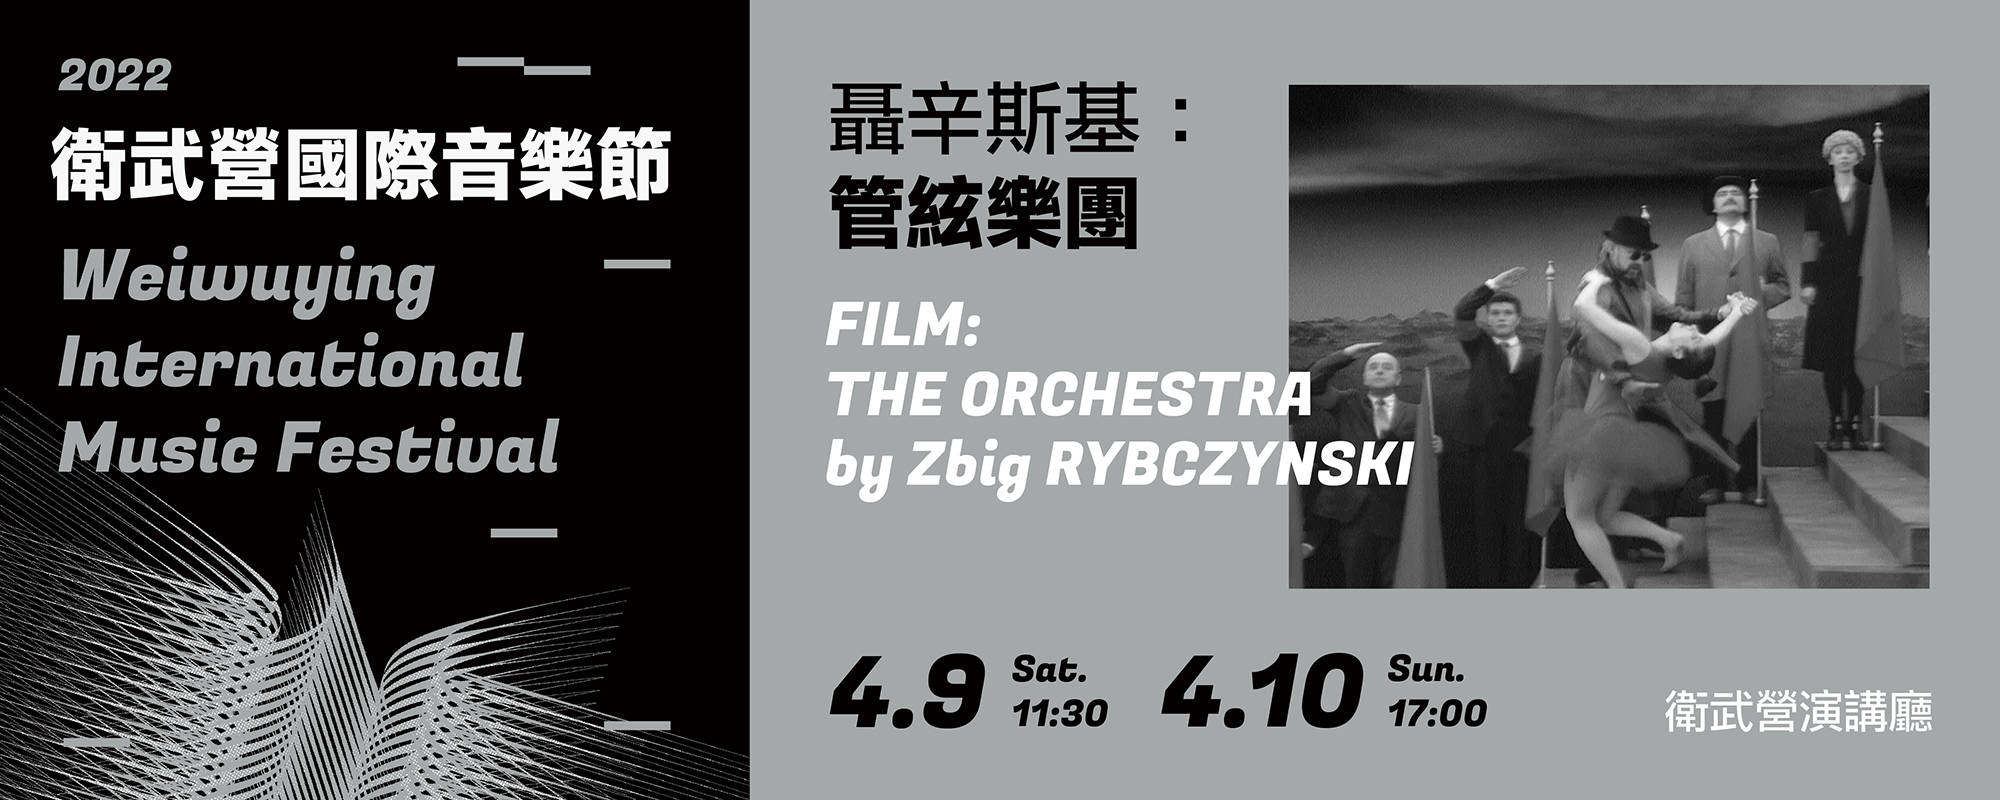 【2022 Weiwuying International Music Festival】Film: The Orchestra by Zbig RYBCZYNSKI